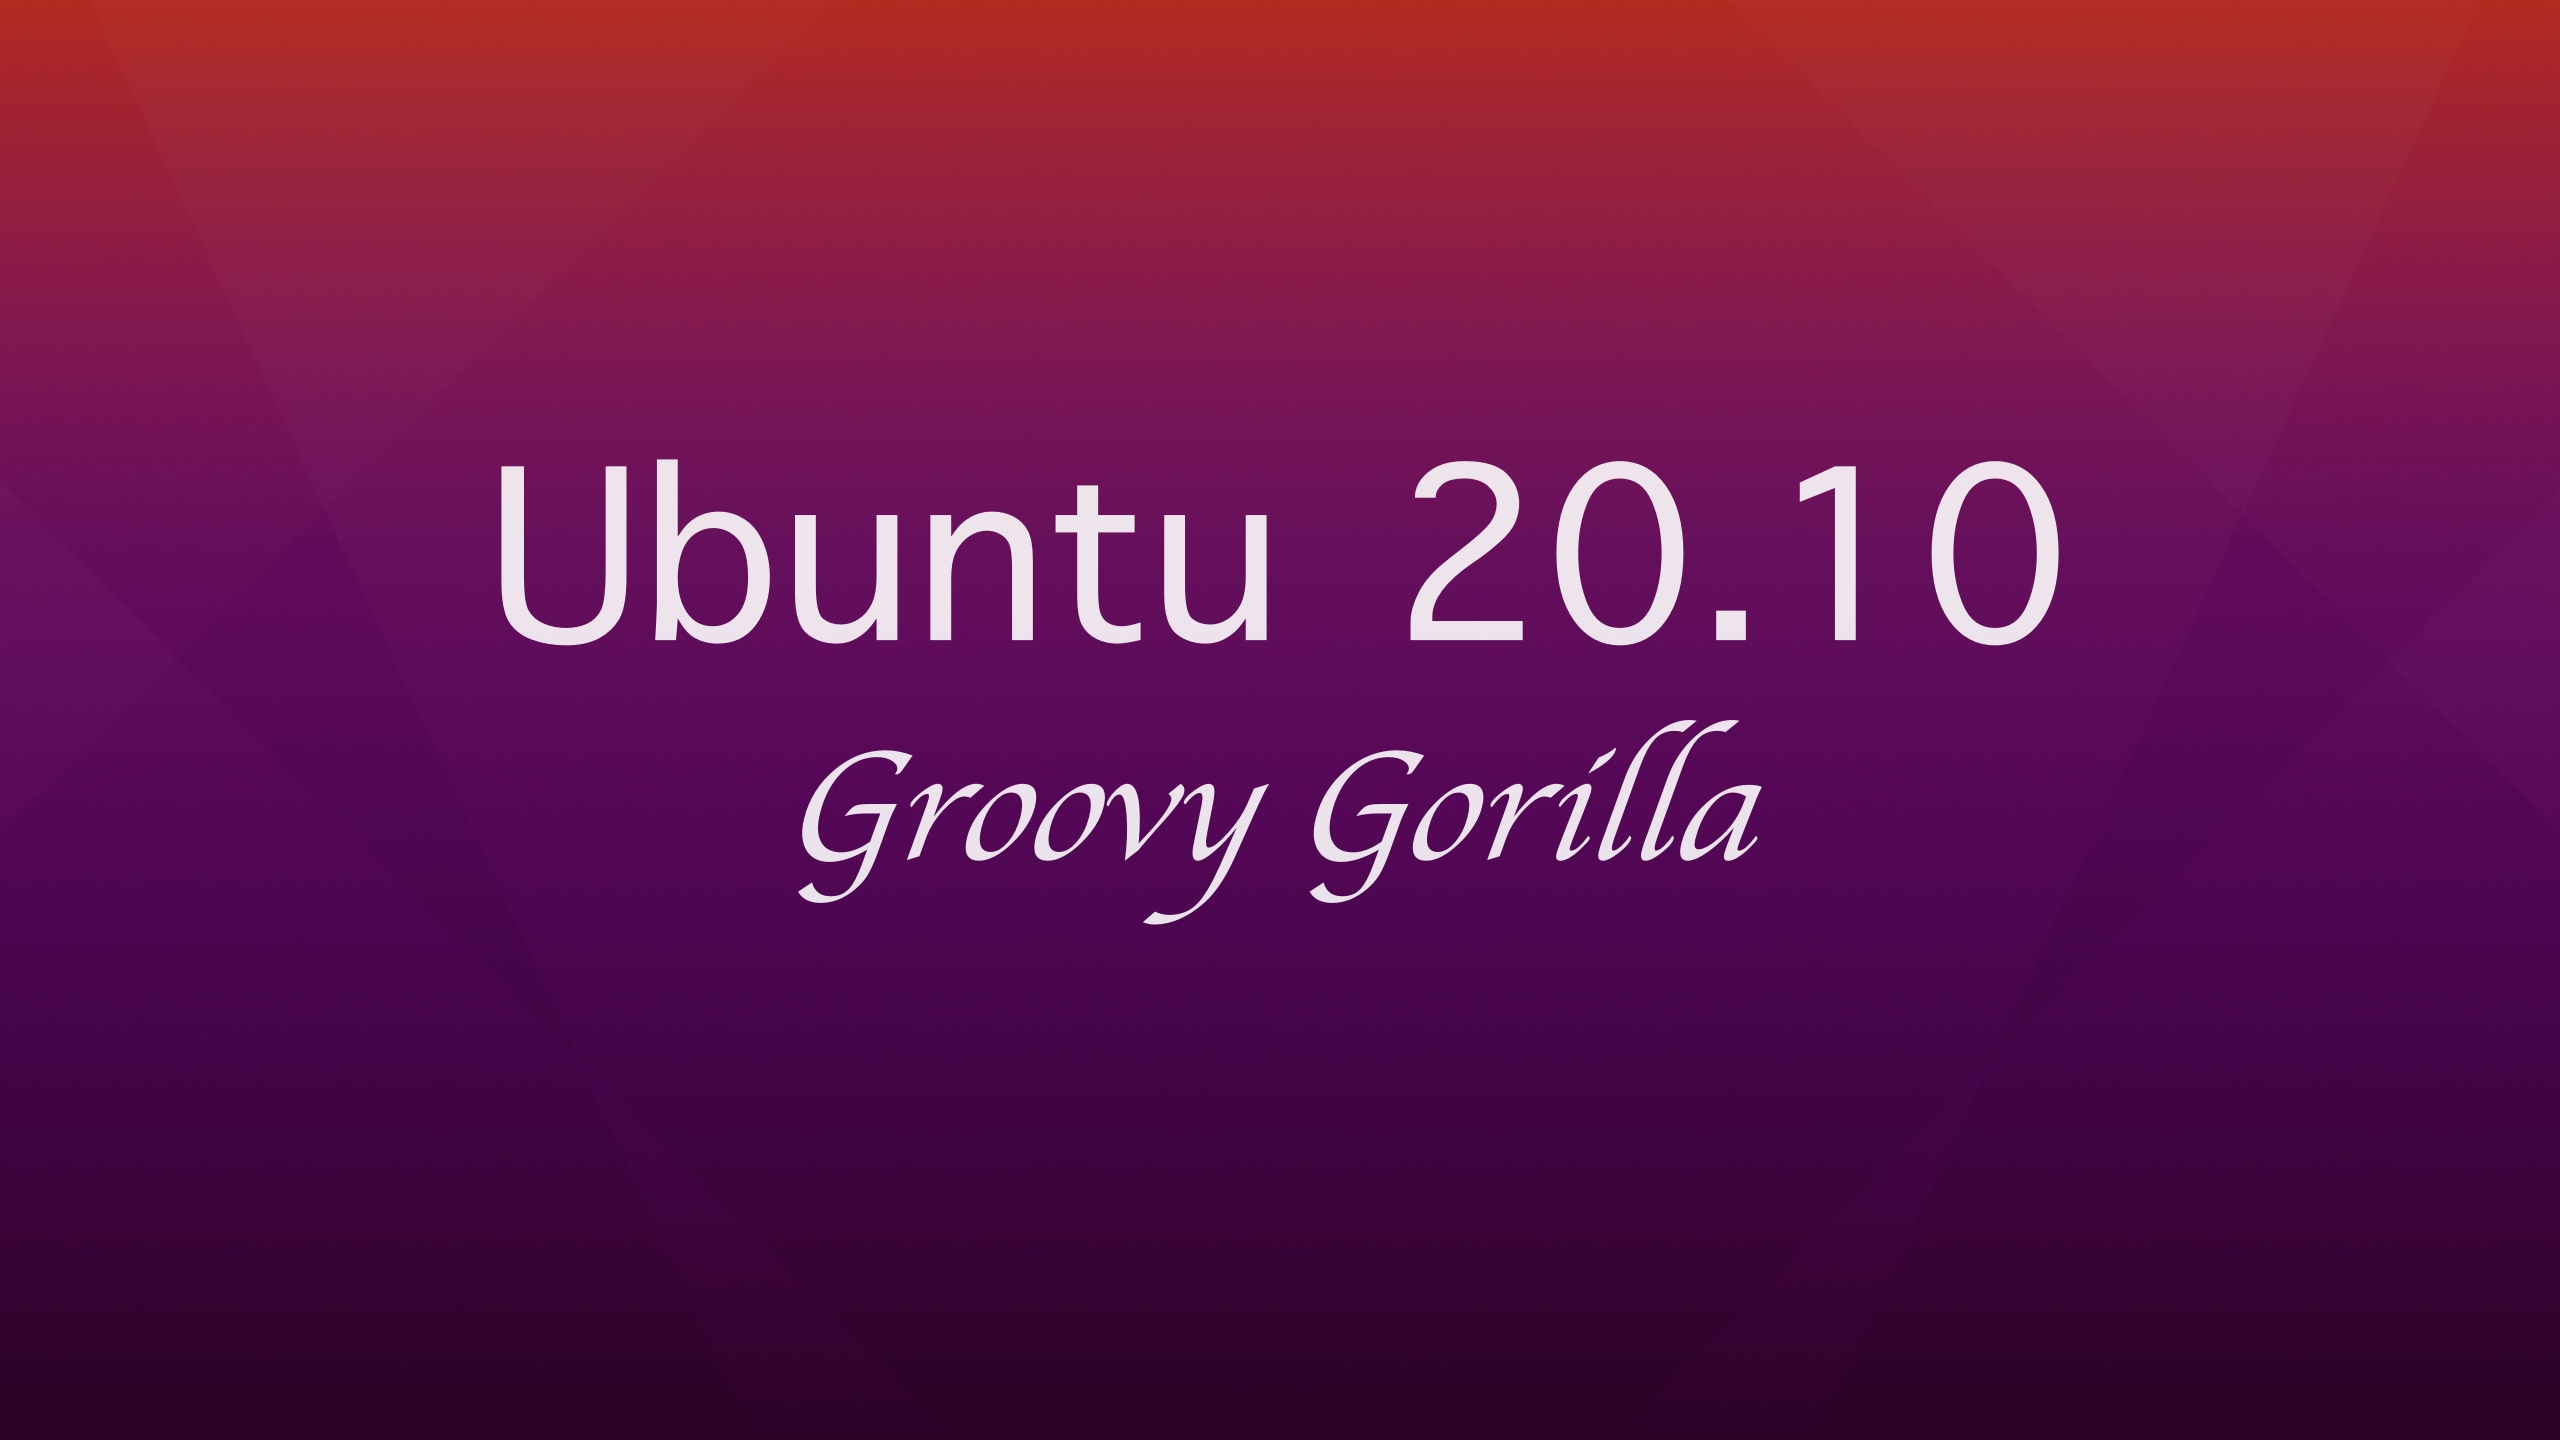 Groovy Gorilla Ubuntu 20 Wallpapers